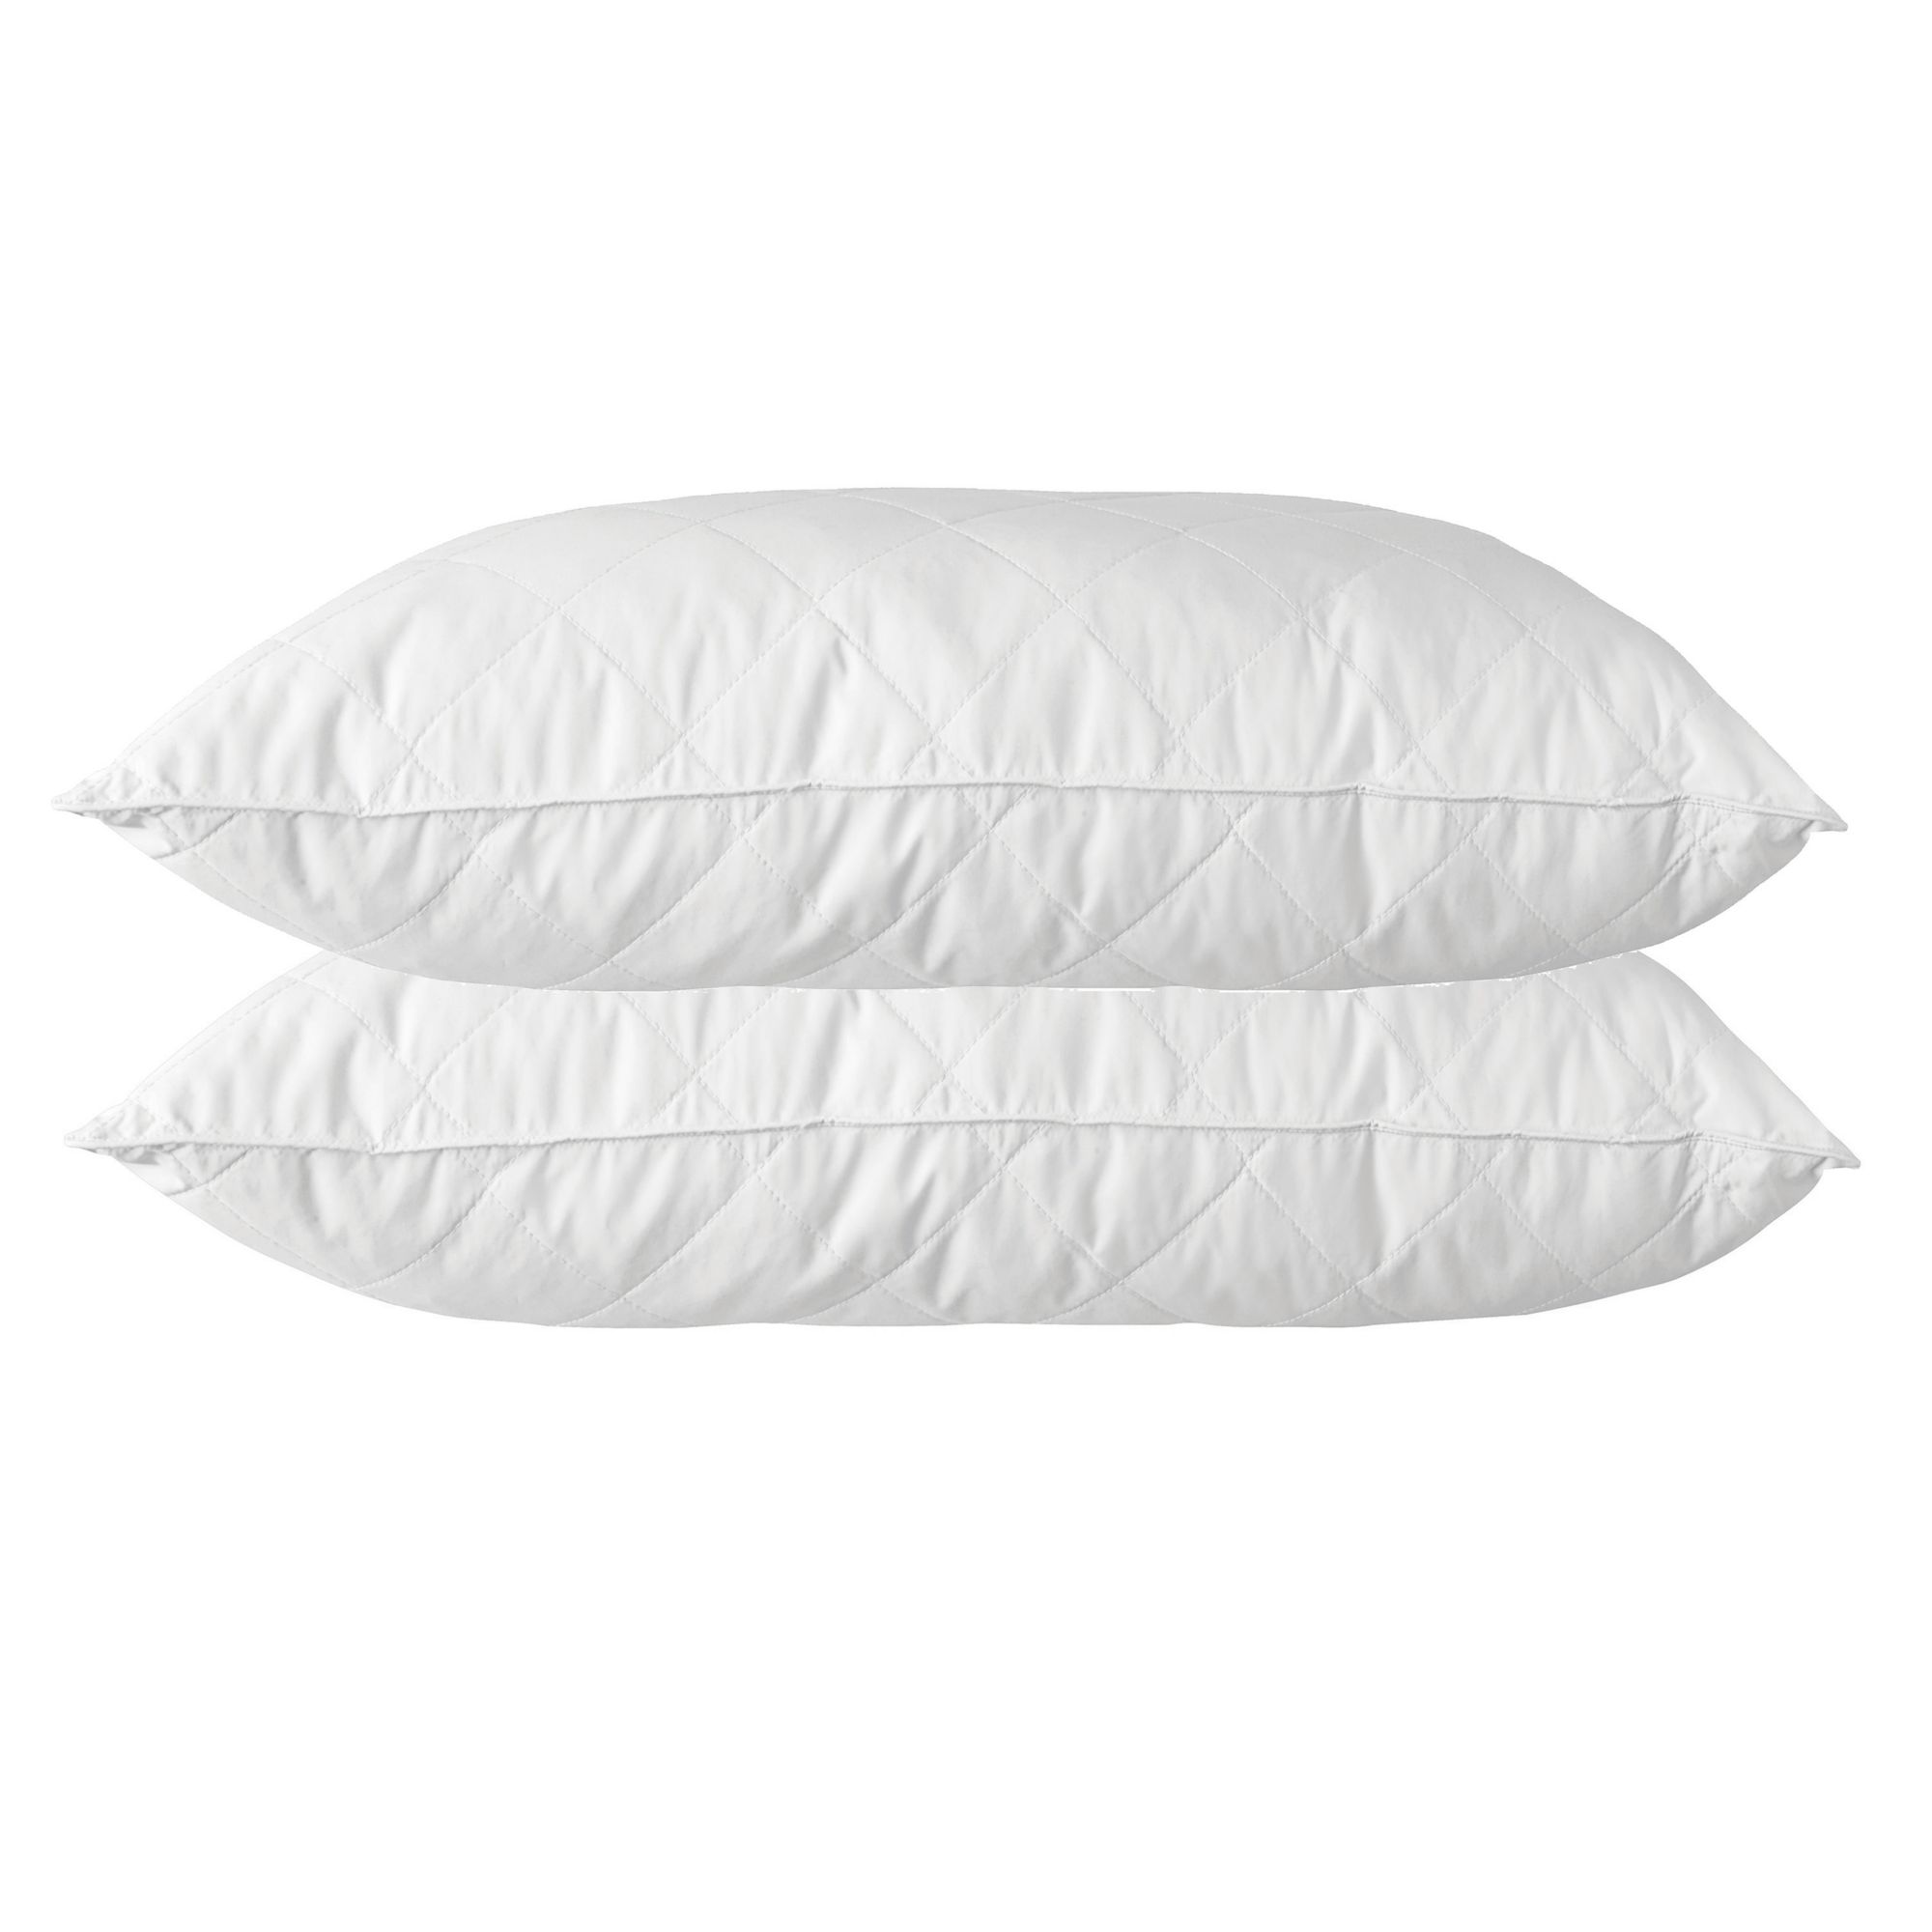 The SilverCrate™ Orthopedic Bedroll Pillow – SilverCrate Plus